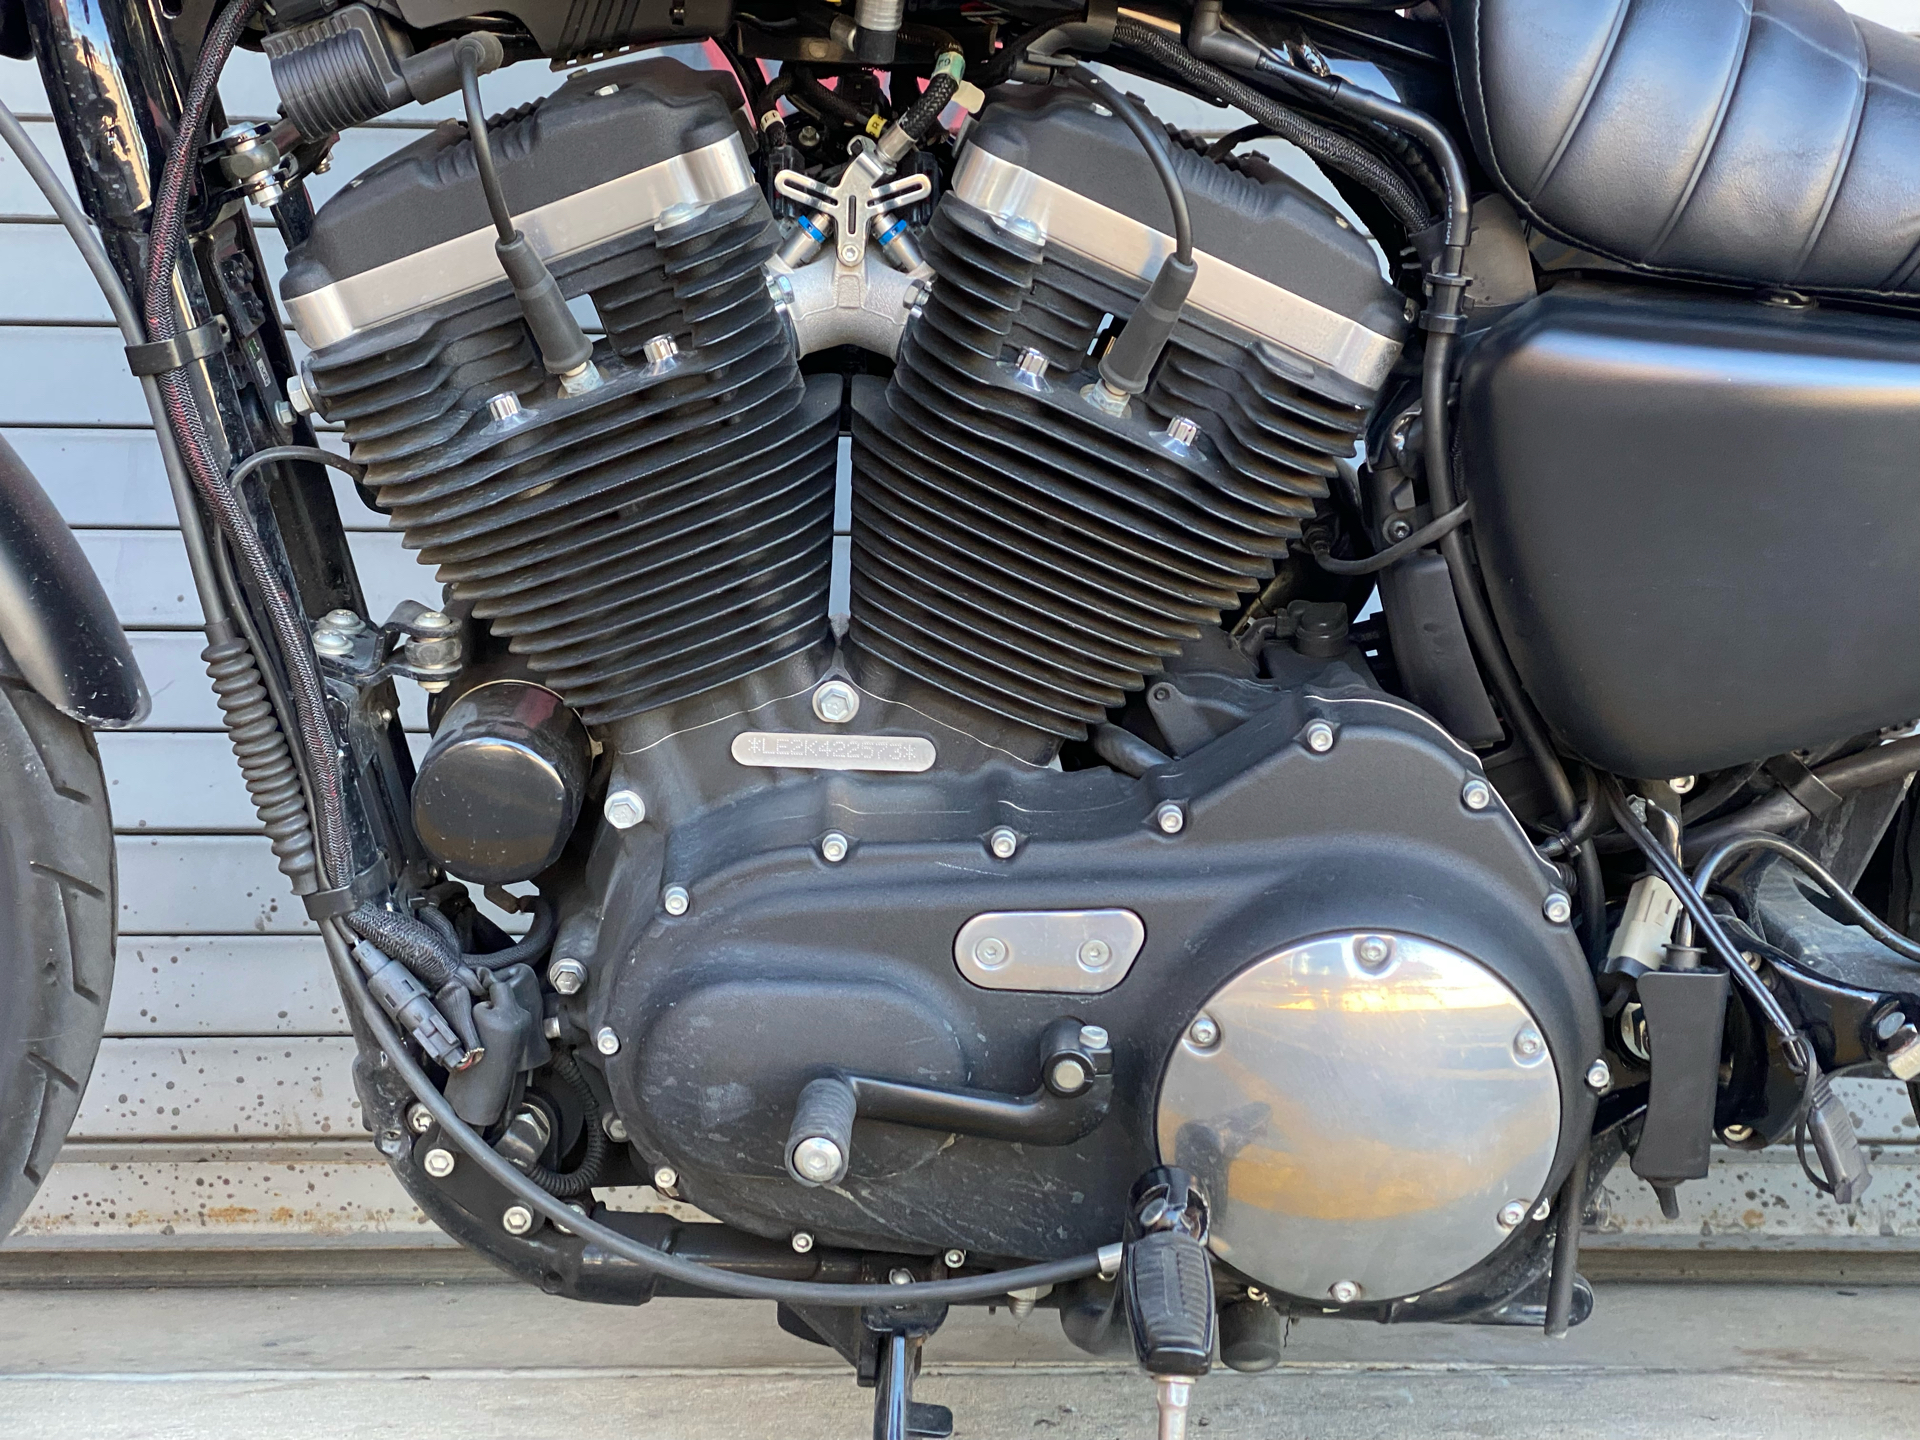 2019 Harley-Davidson Iron 883™ in Carrollton, Texas - Photo 17